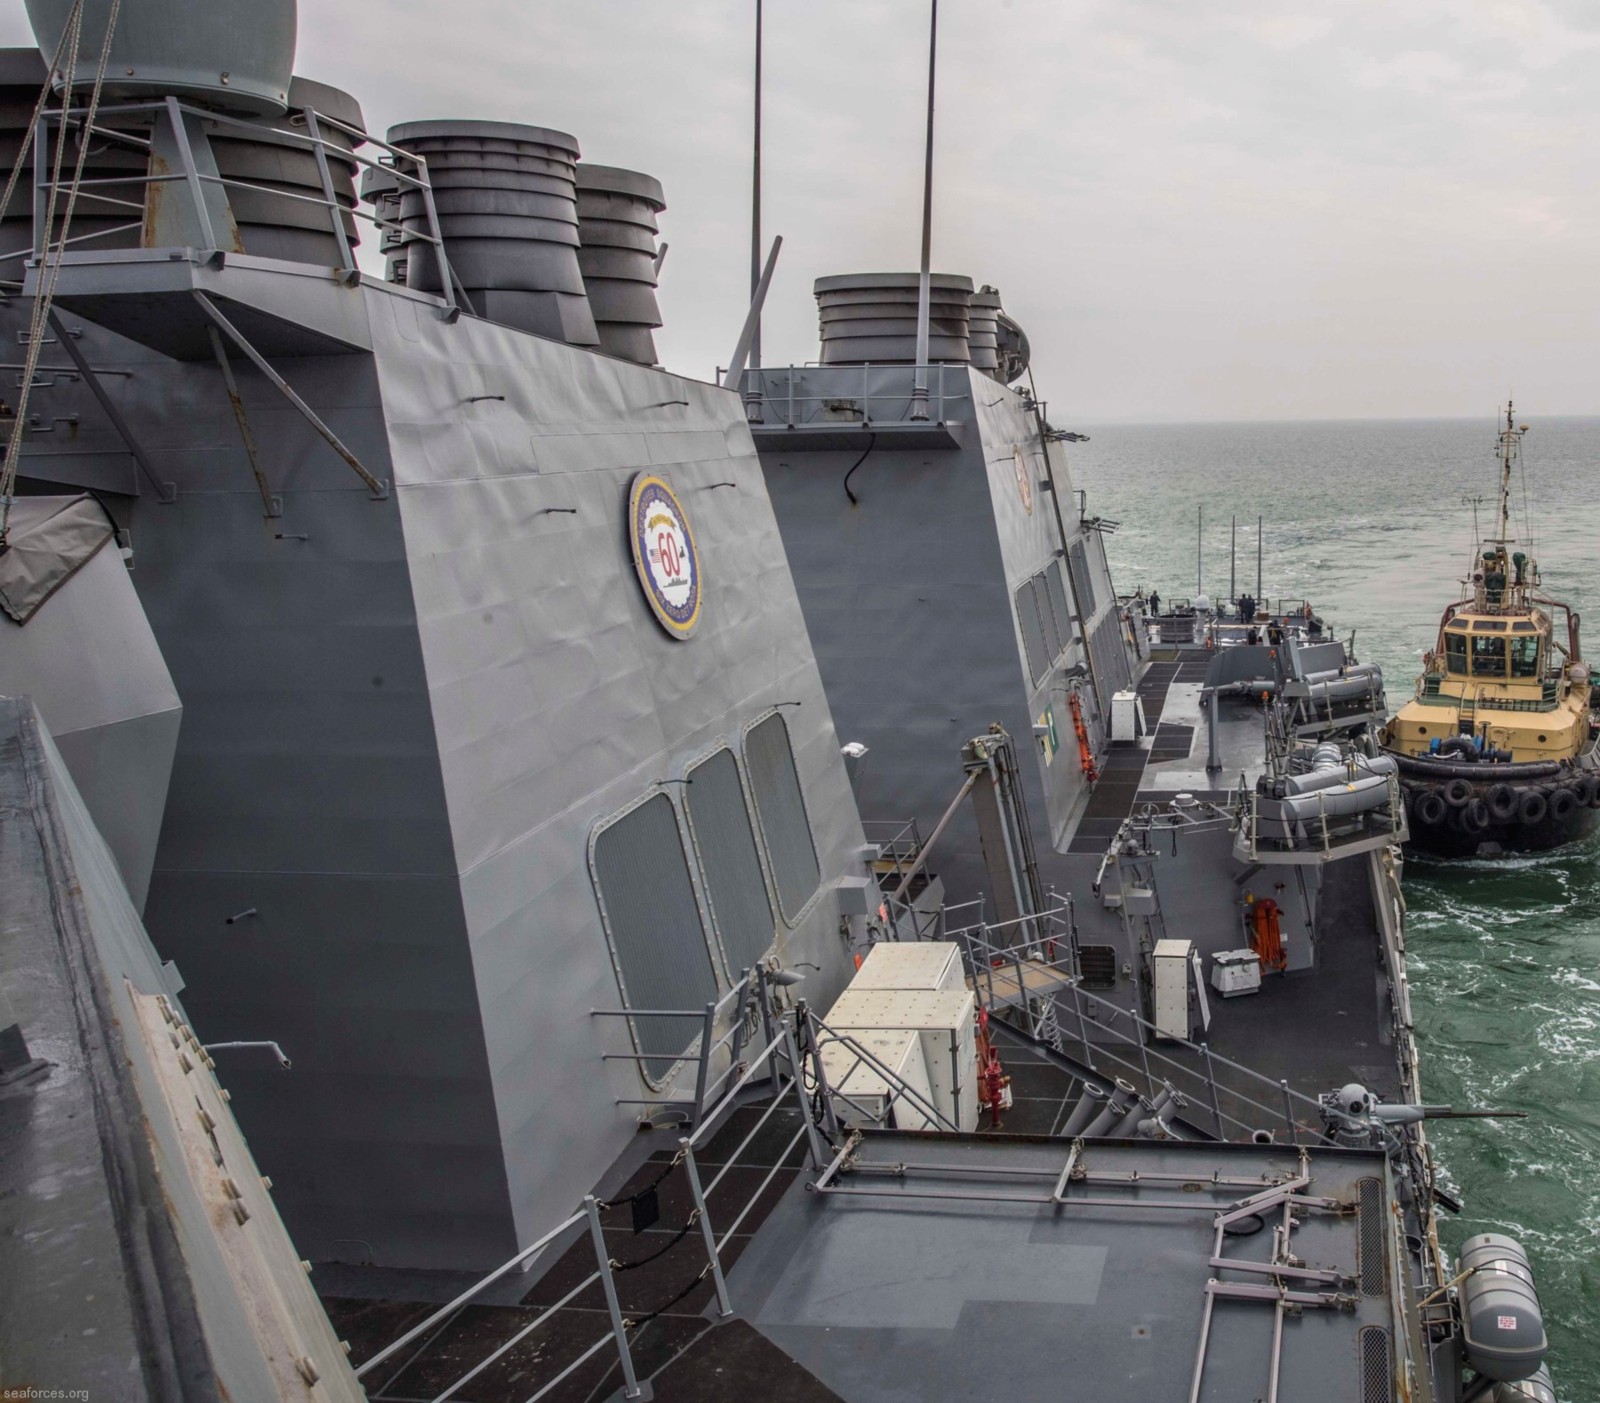 ddg-64 uss carney destroyer arleigh burke class navy 16 odessa ukraine